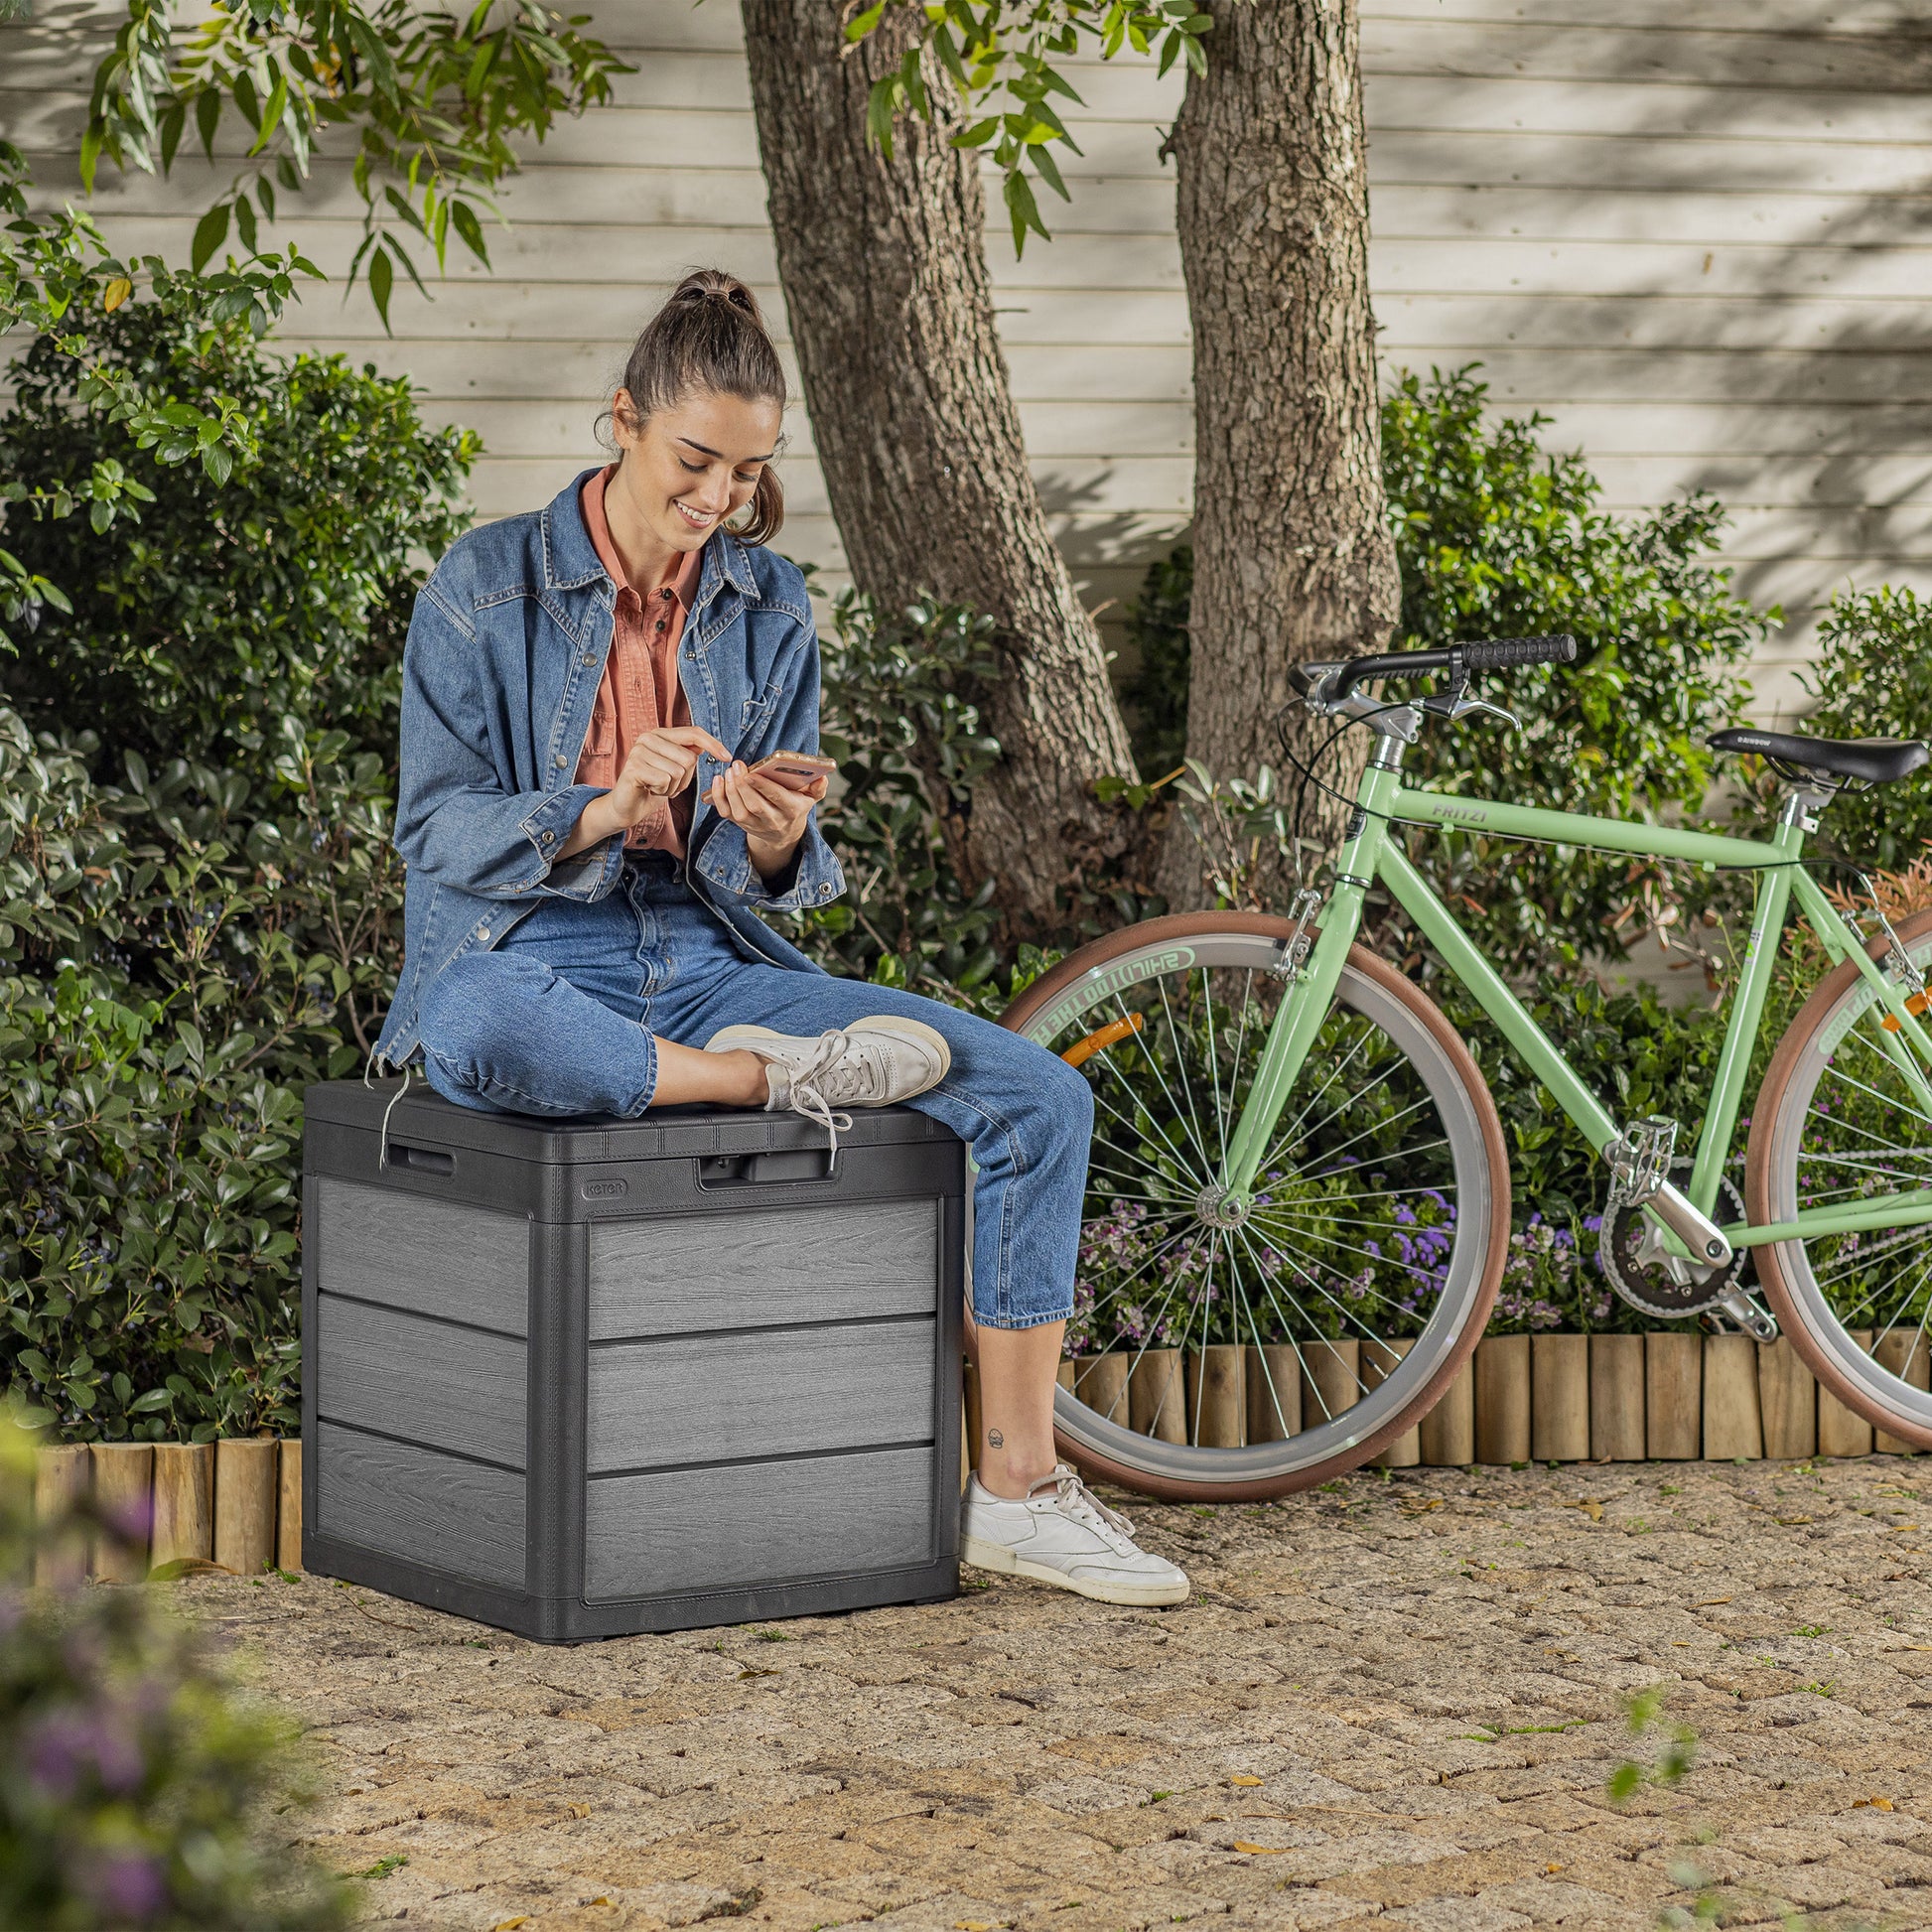 Cortina 30 Gallon Resin Deck Box for Patio Outdoor Storage, Grey